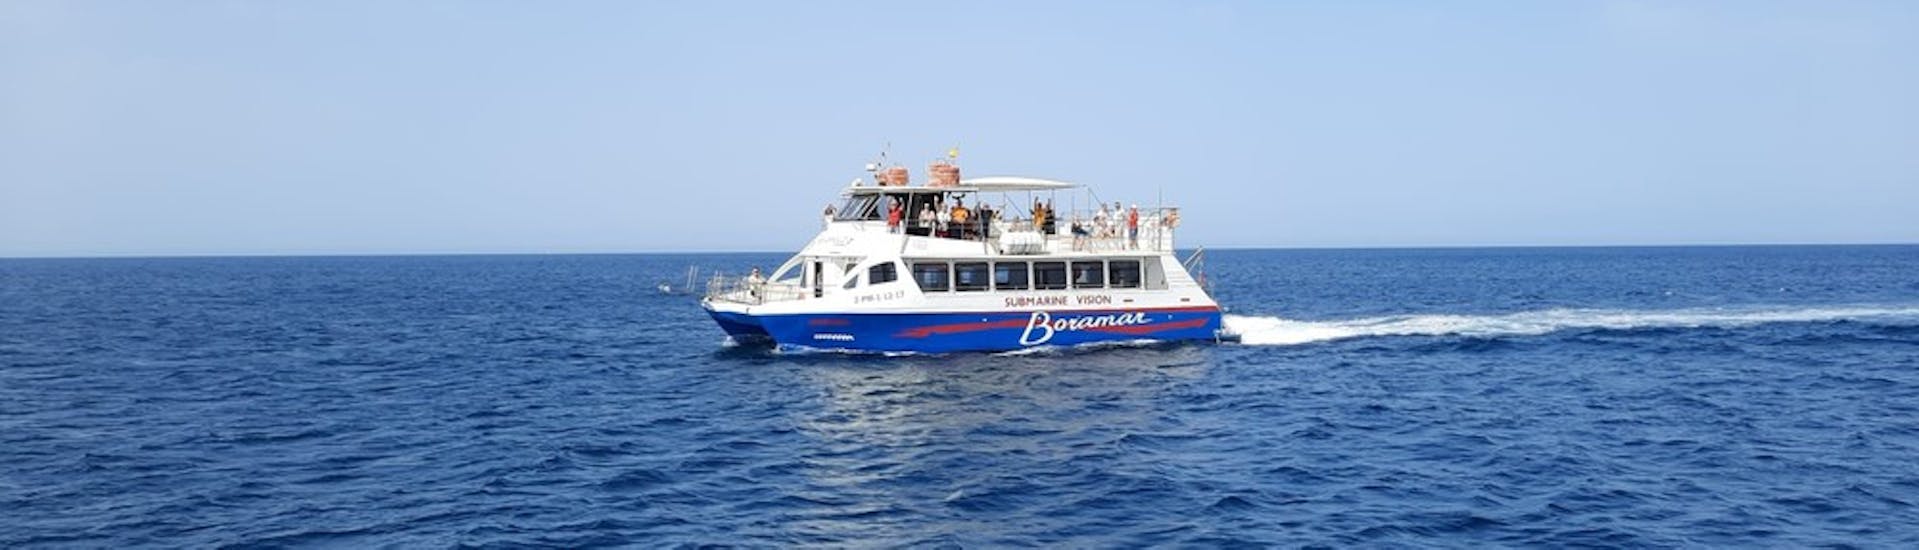 Boottransfer tussen Denia en Jávea met Boramar Denia.